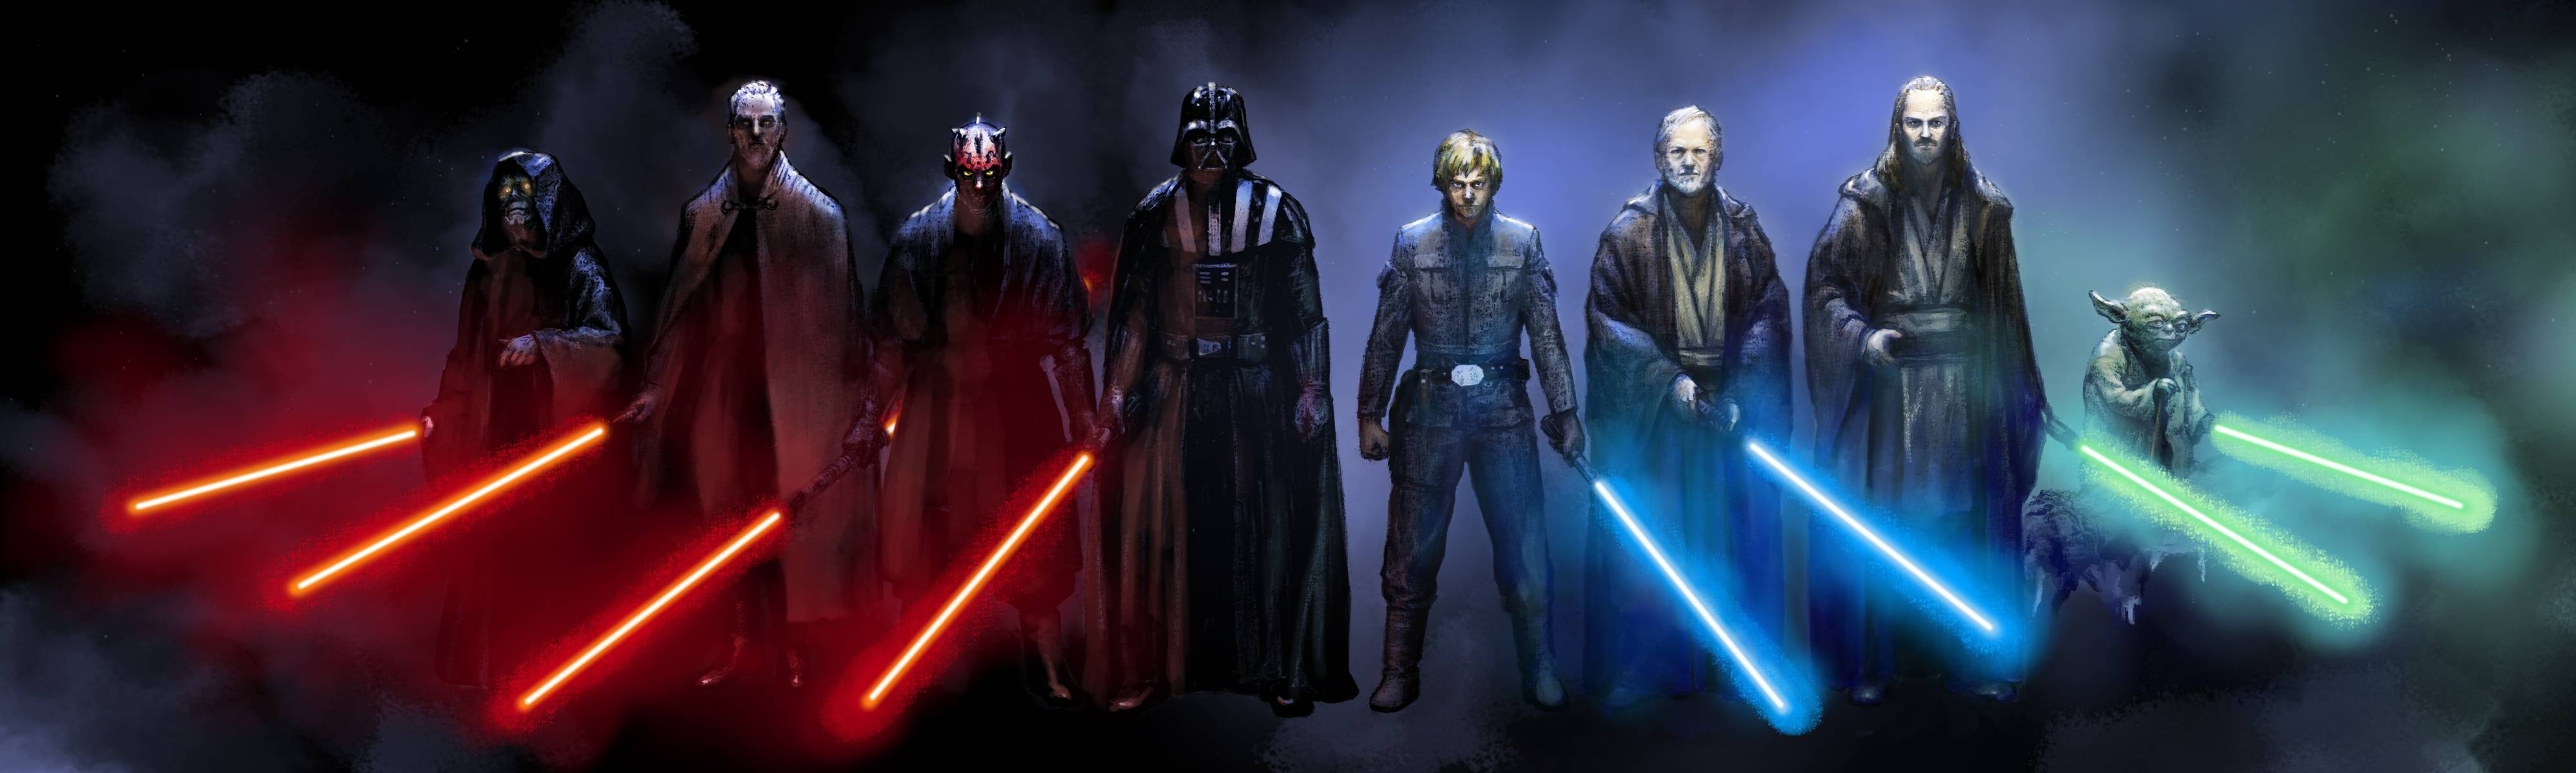 Star Wars Jedi Sith Laser Swords Mask Emperor Palpatine Luke Skywalker Darth Vader Yoda Collage Star 4000x1200